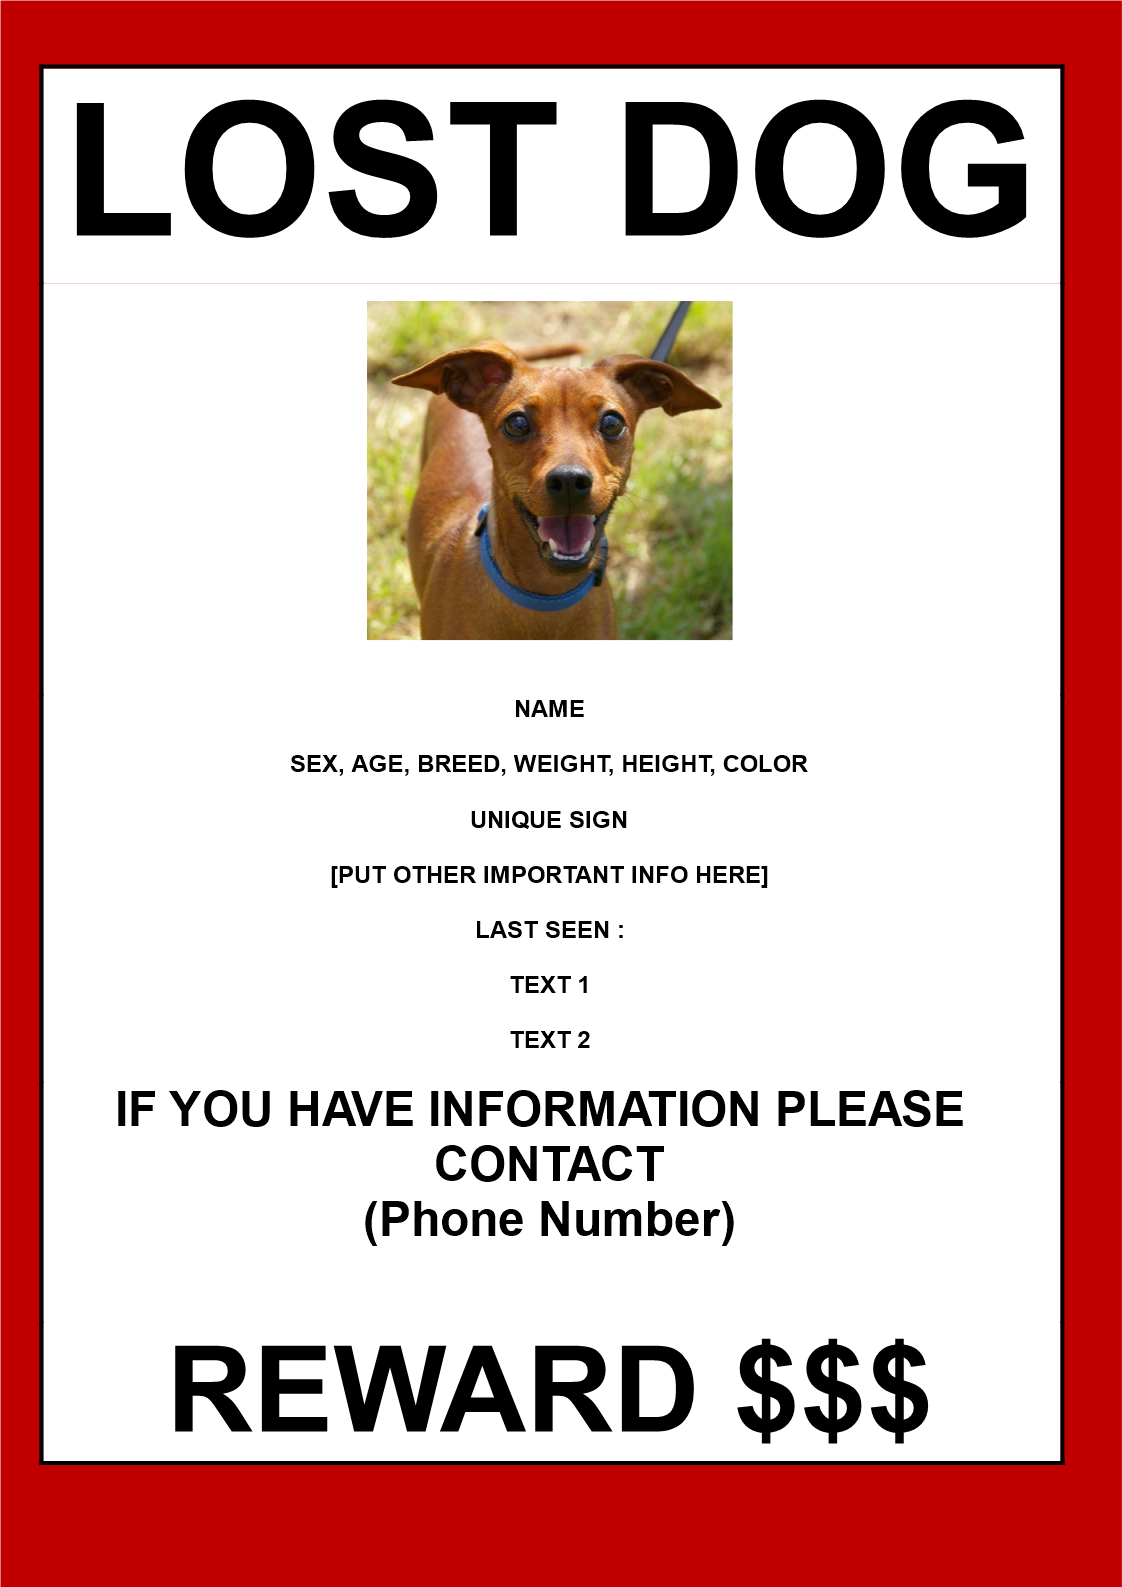 find lost dog poster in a3 size plantilla imagen principal